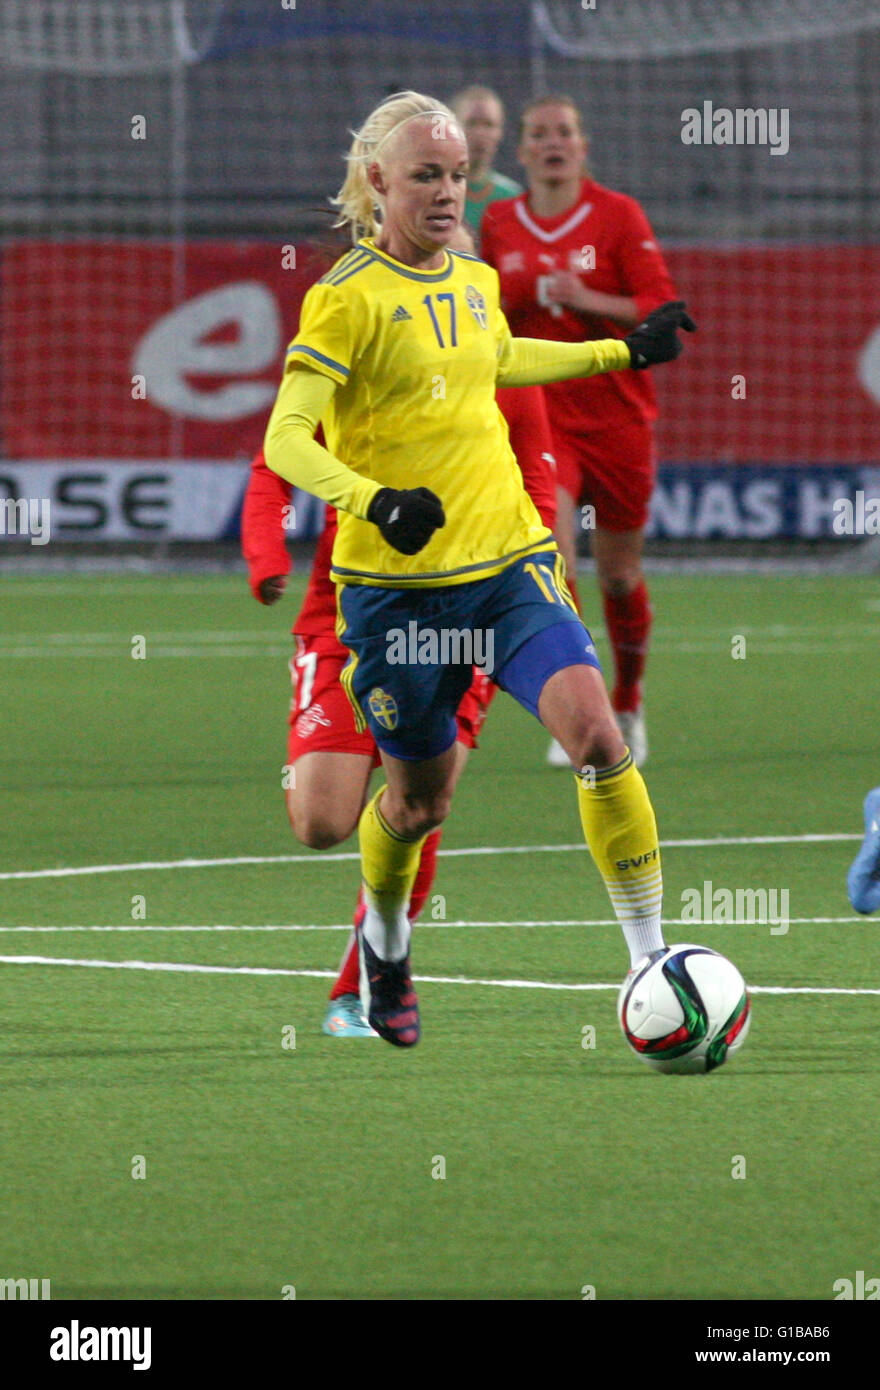 CAROLINE SEGER Football midfielder Sweden National Team and Professional in Paris Saint-Germain Stock Photo